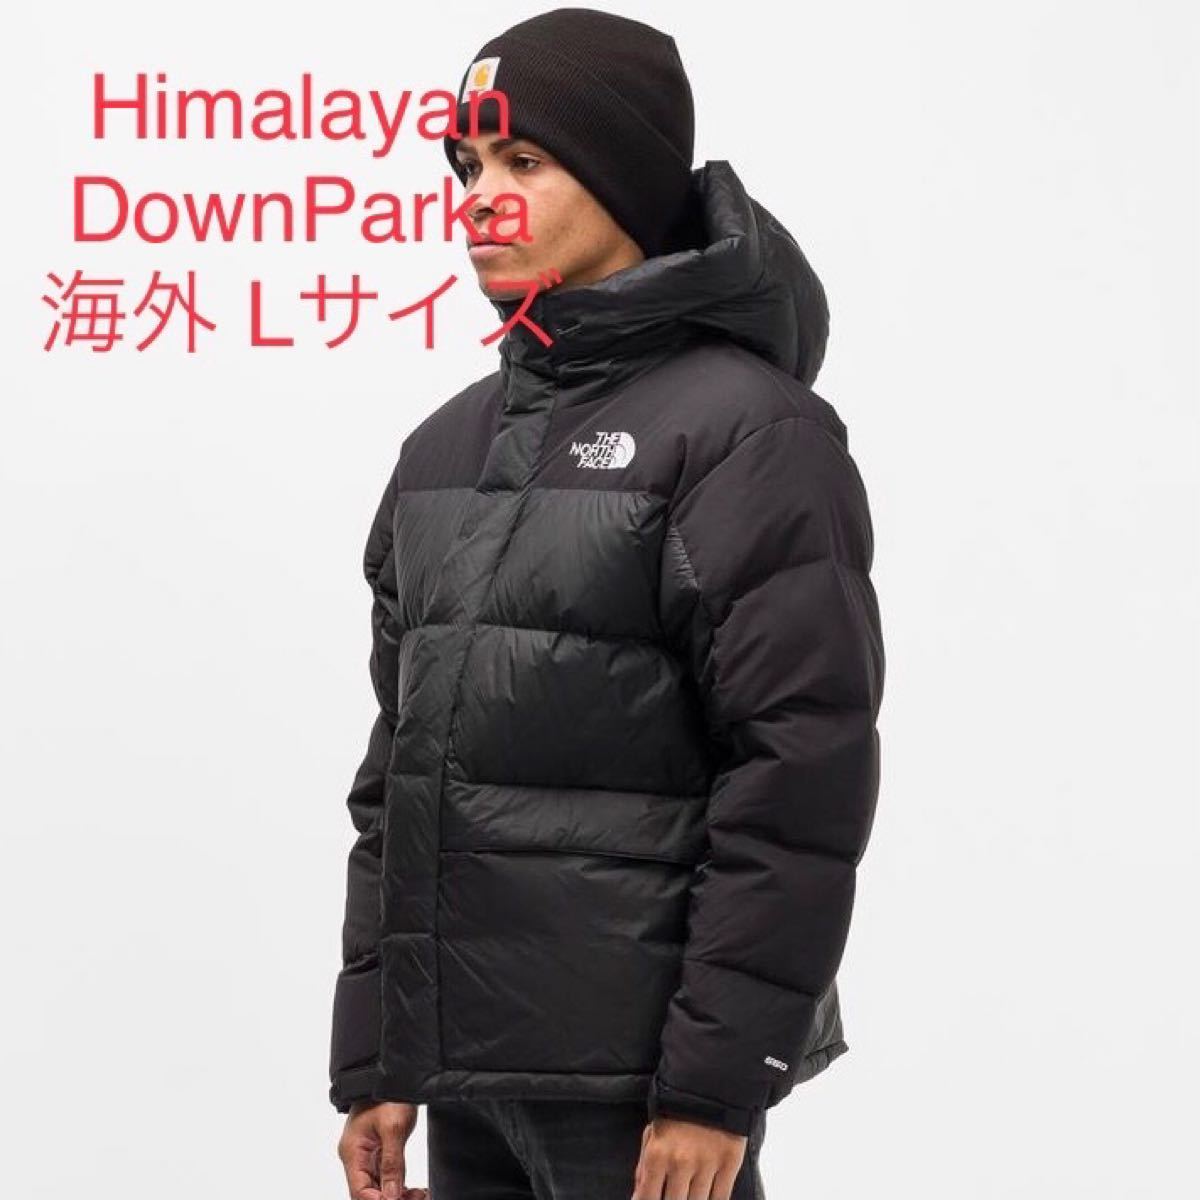 The North Face Himalayan Down Parka Lサイズ(US) メンズファッション 